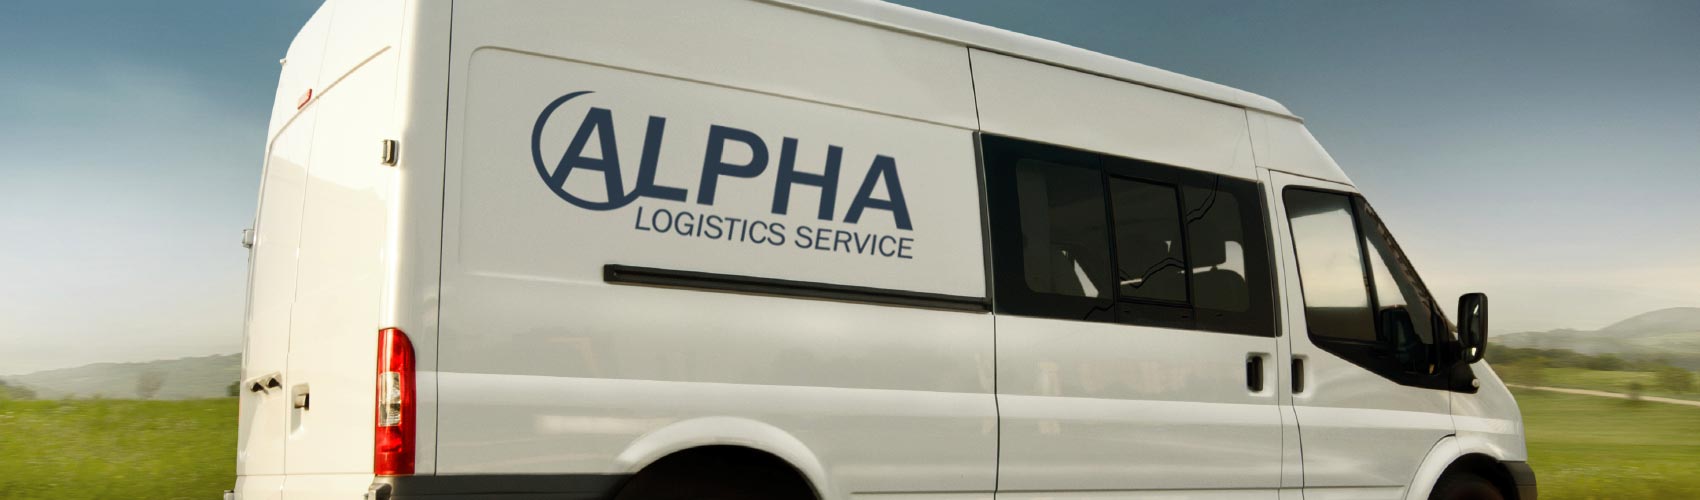 A van with the Alpha Logistics Service logo.